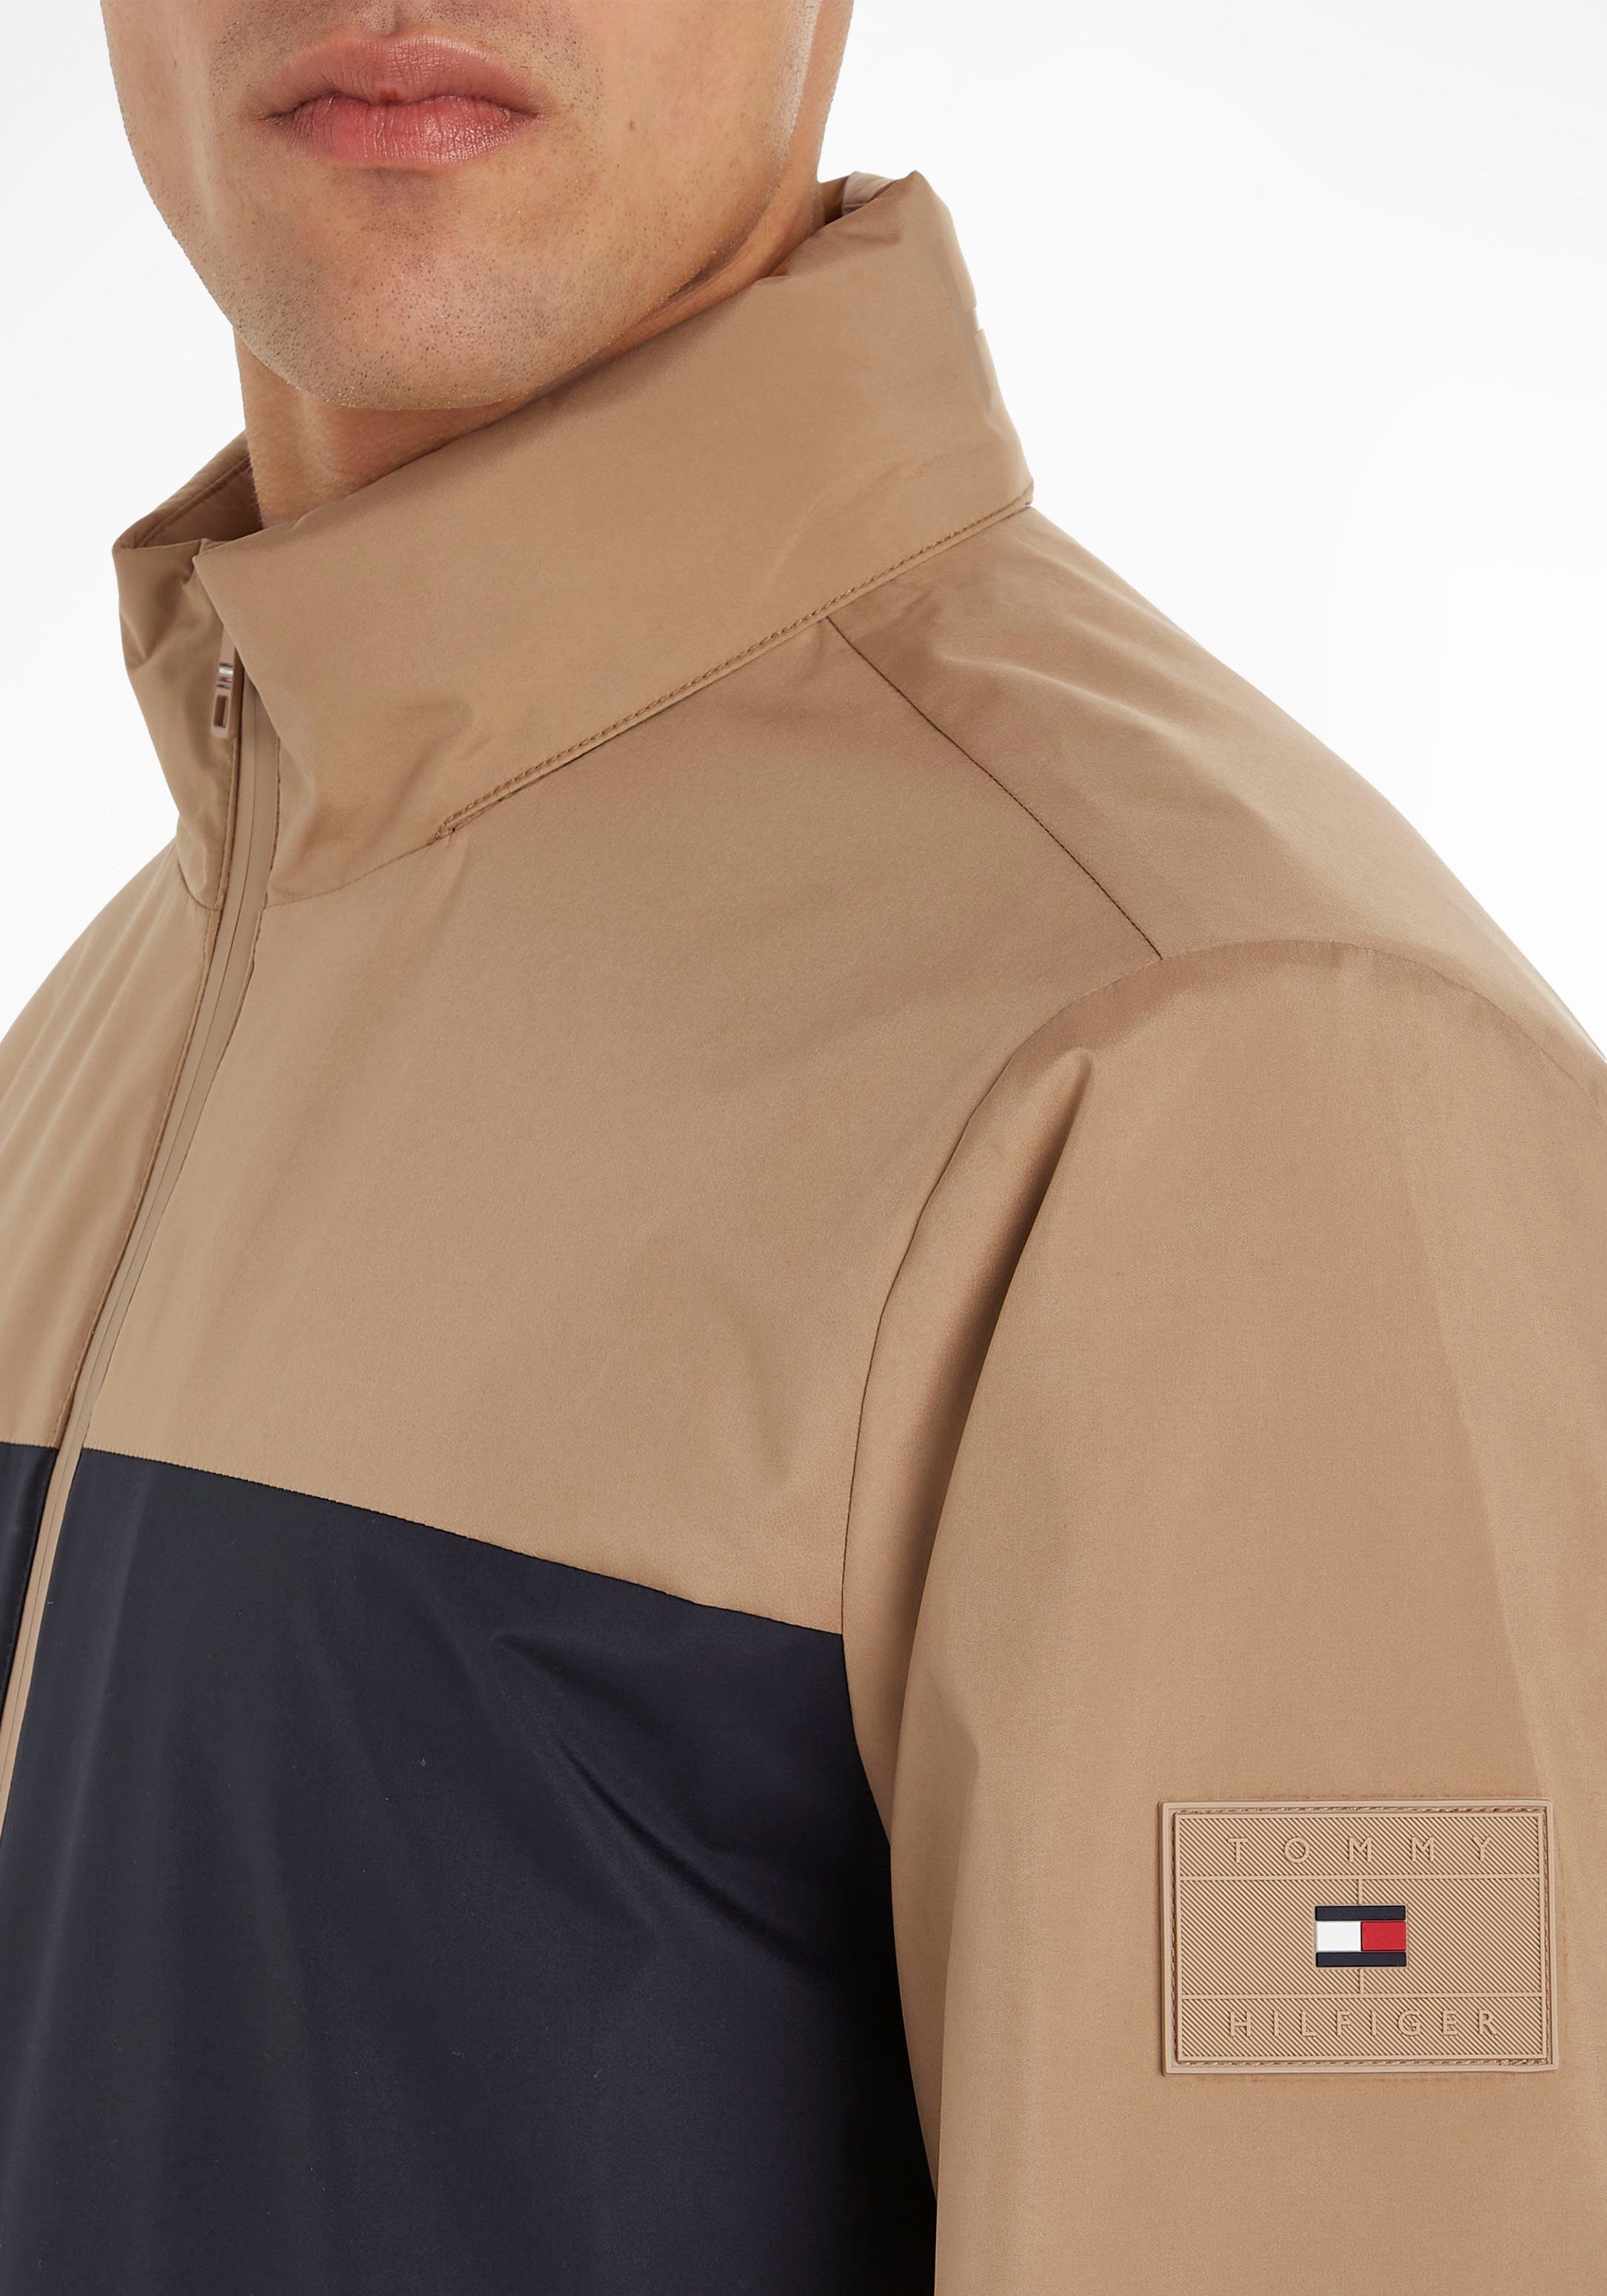 Design TH im REGATTA PROTECT Classic JACKET Khaki Tommy hochgeschlossenen Hilfiger Outdoorjacke